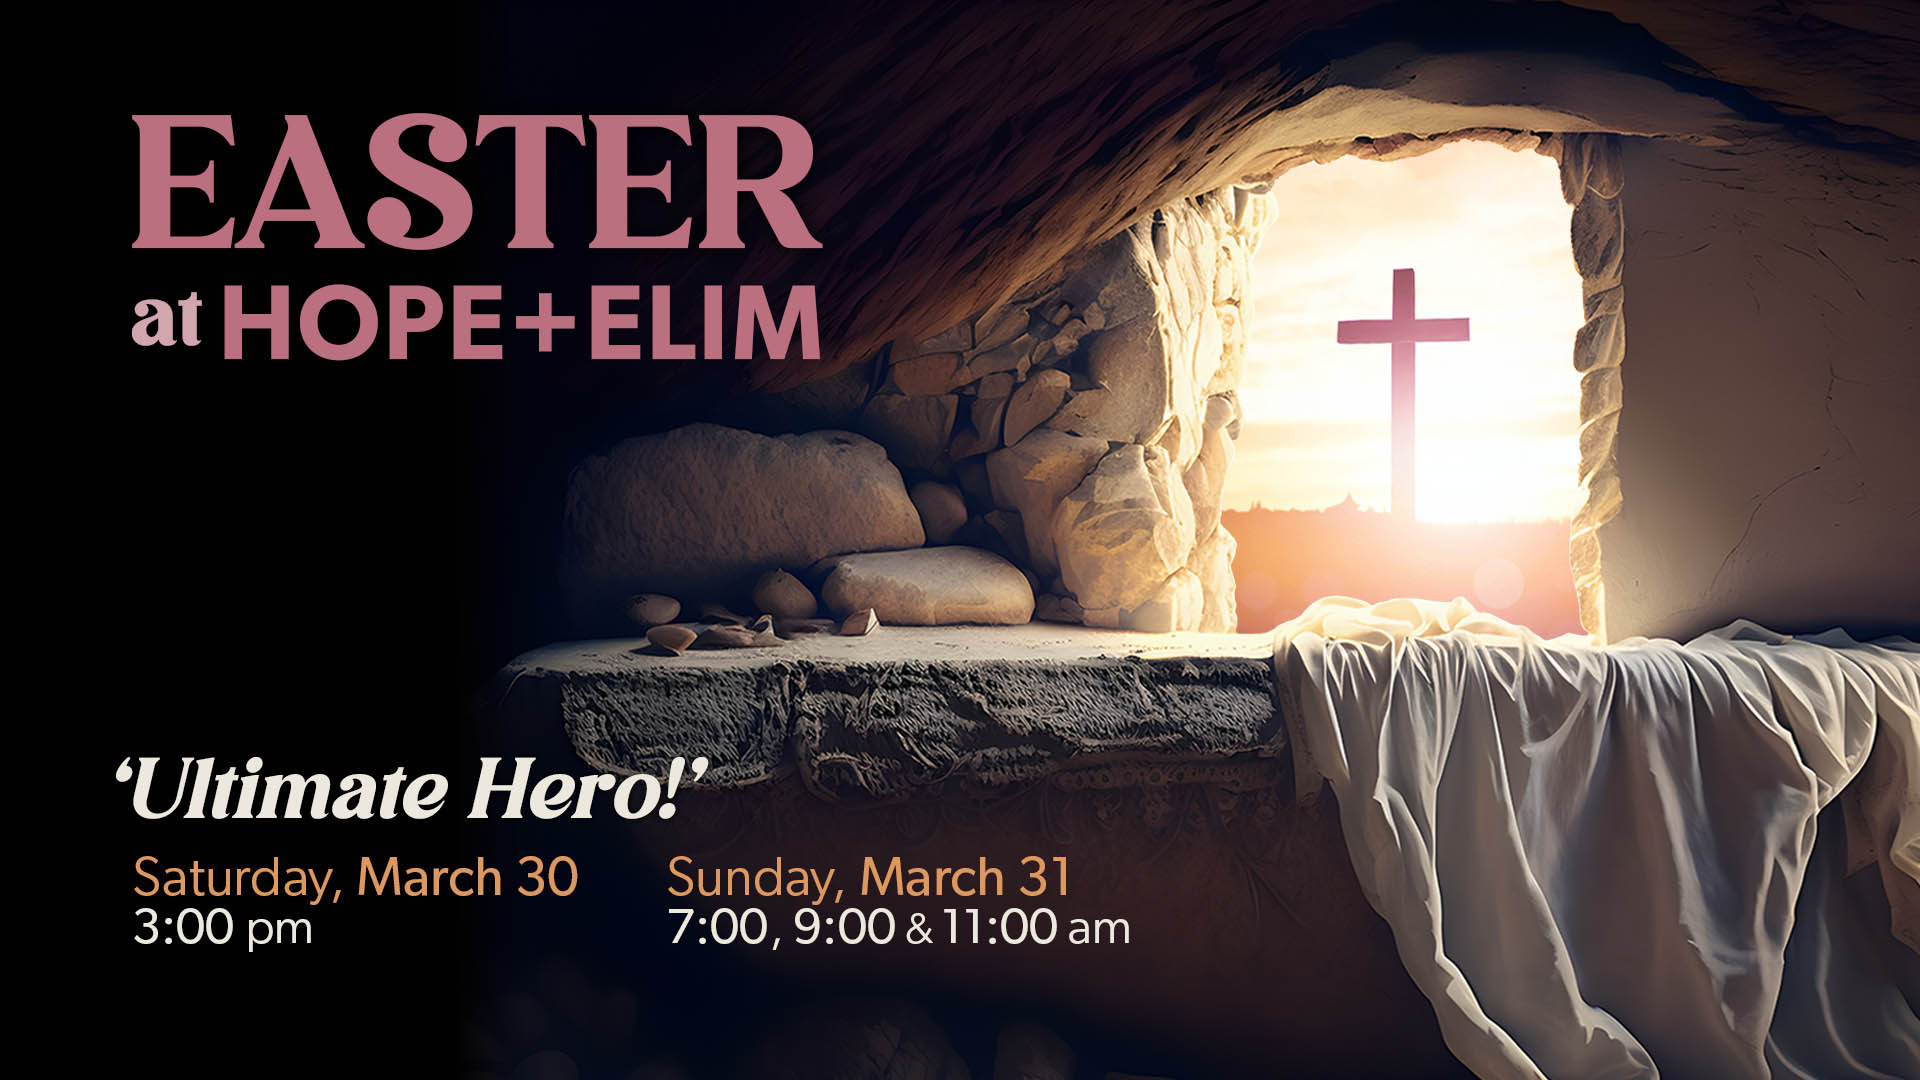 Easter at Hope+Elim